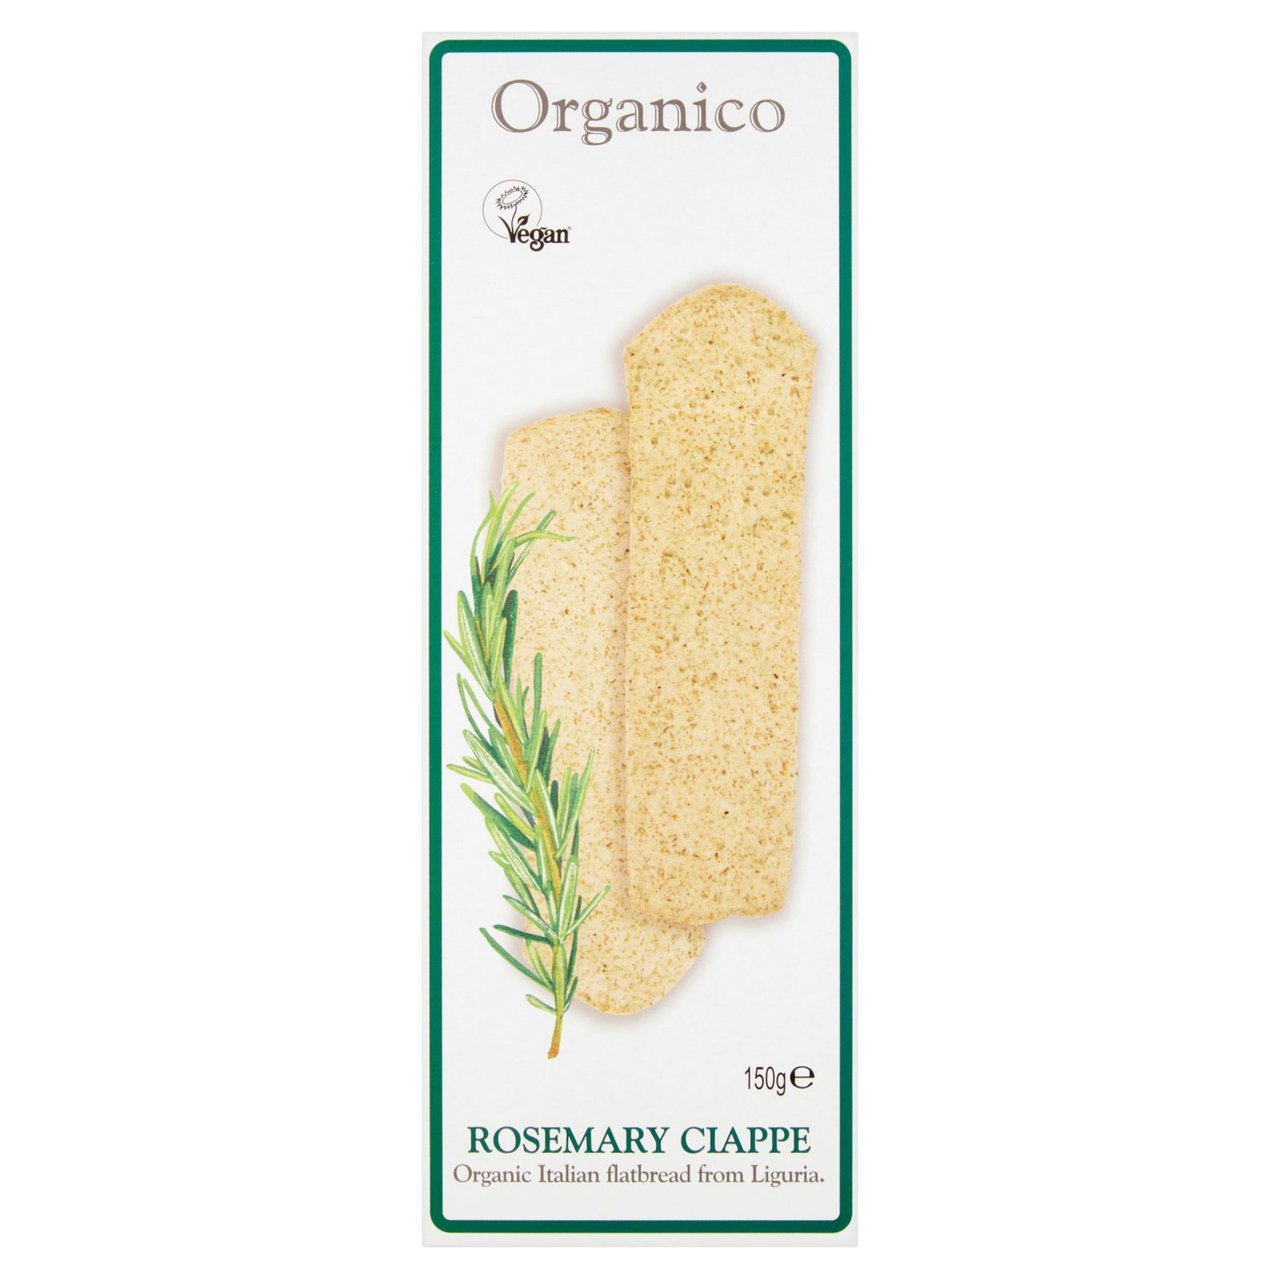 Organico Rosemary Ciappe